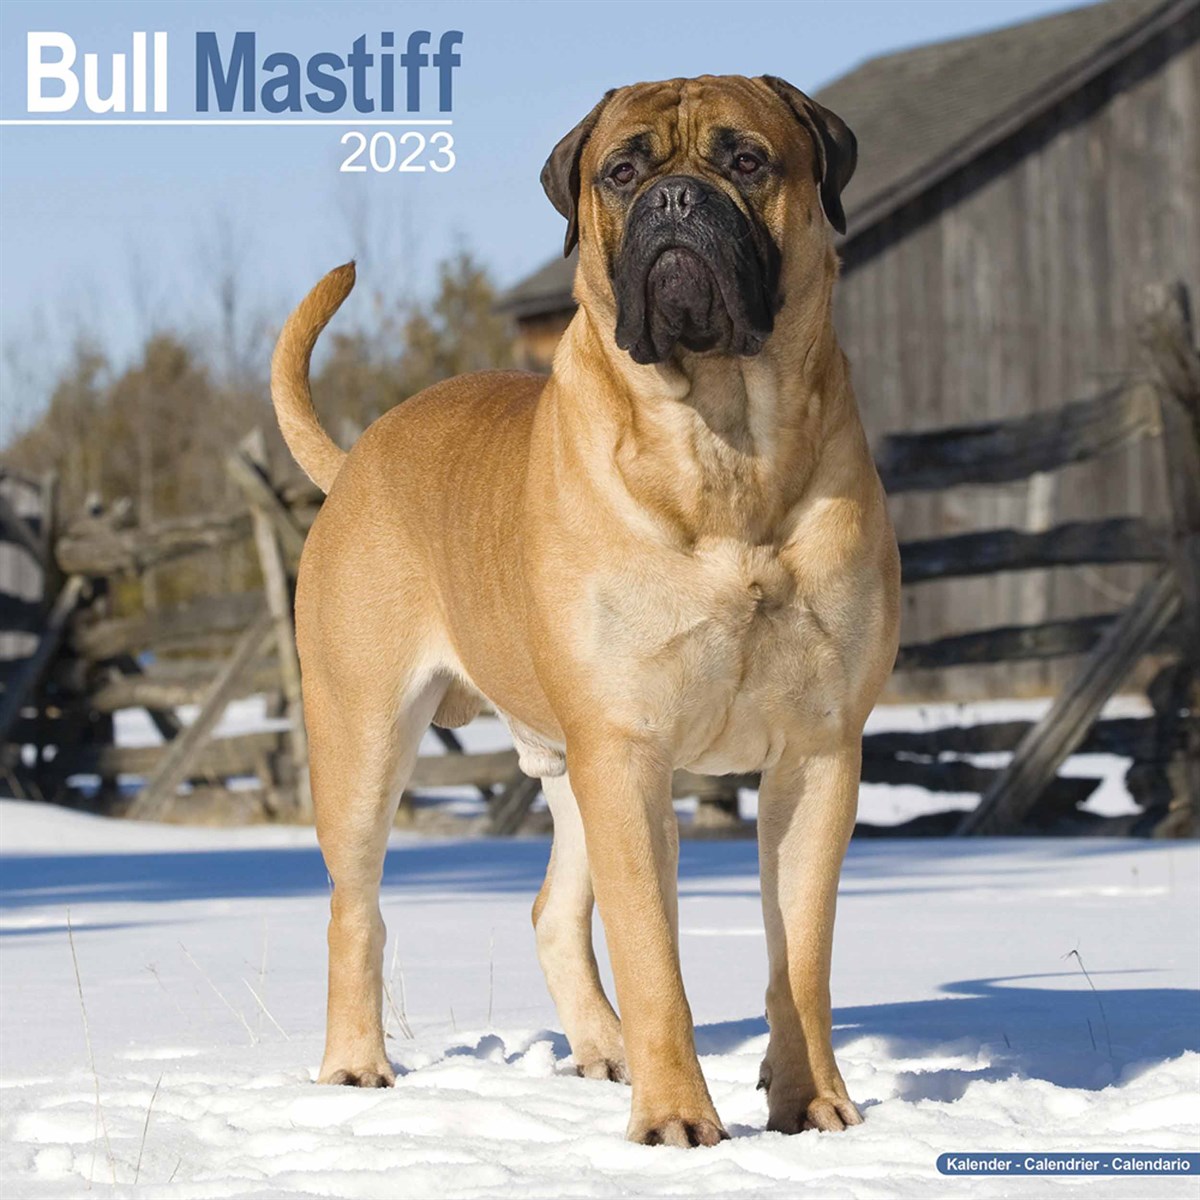 Bull Mastiff 2023 Calendars